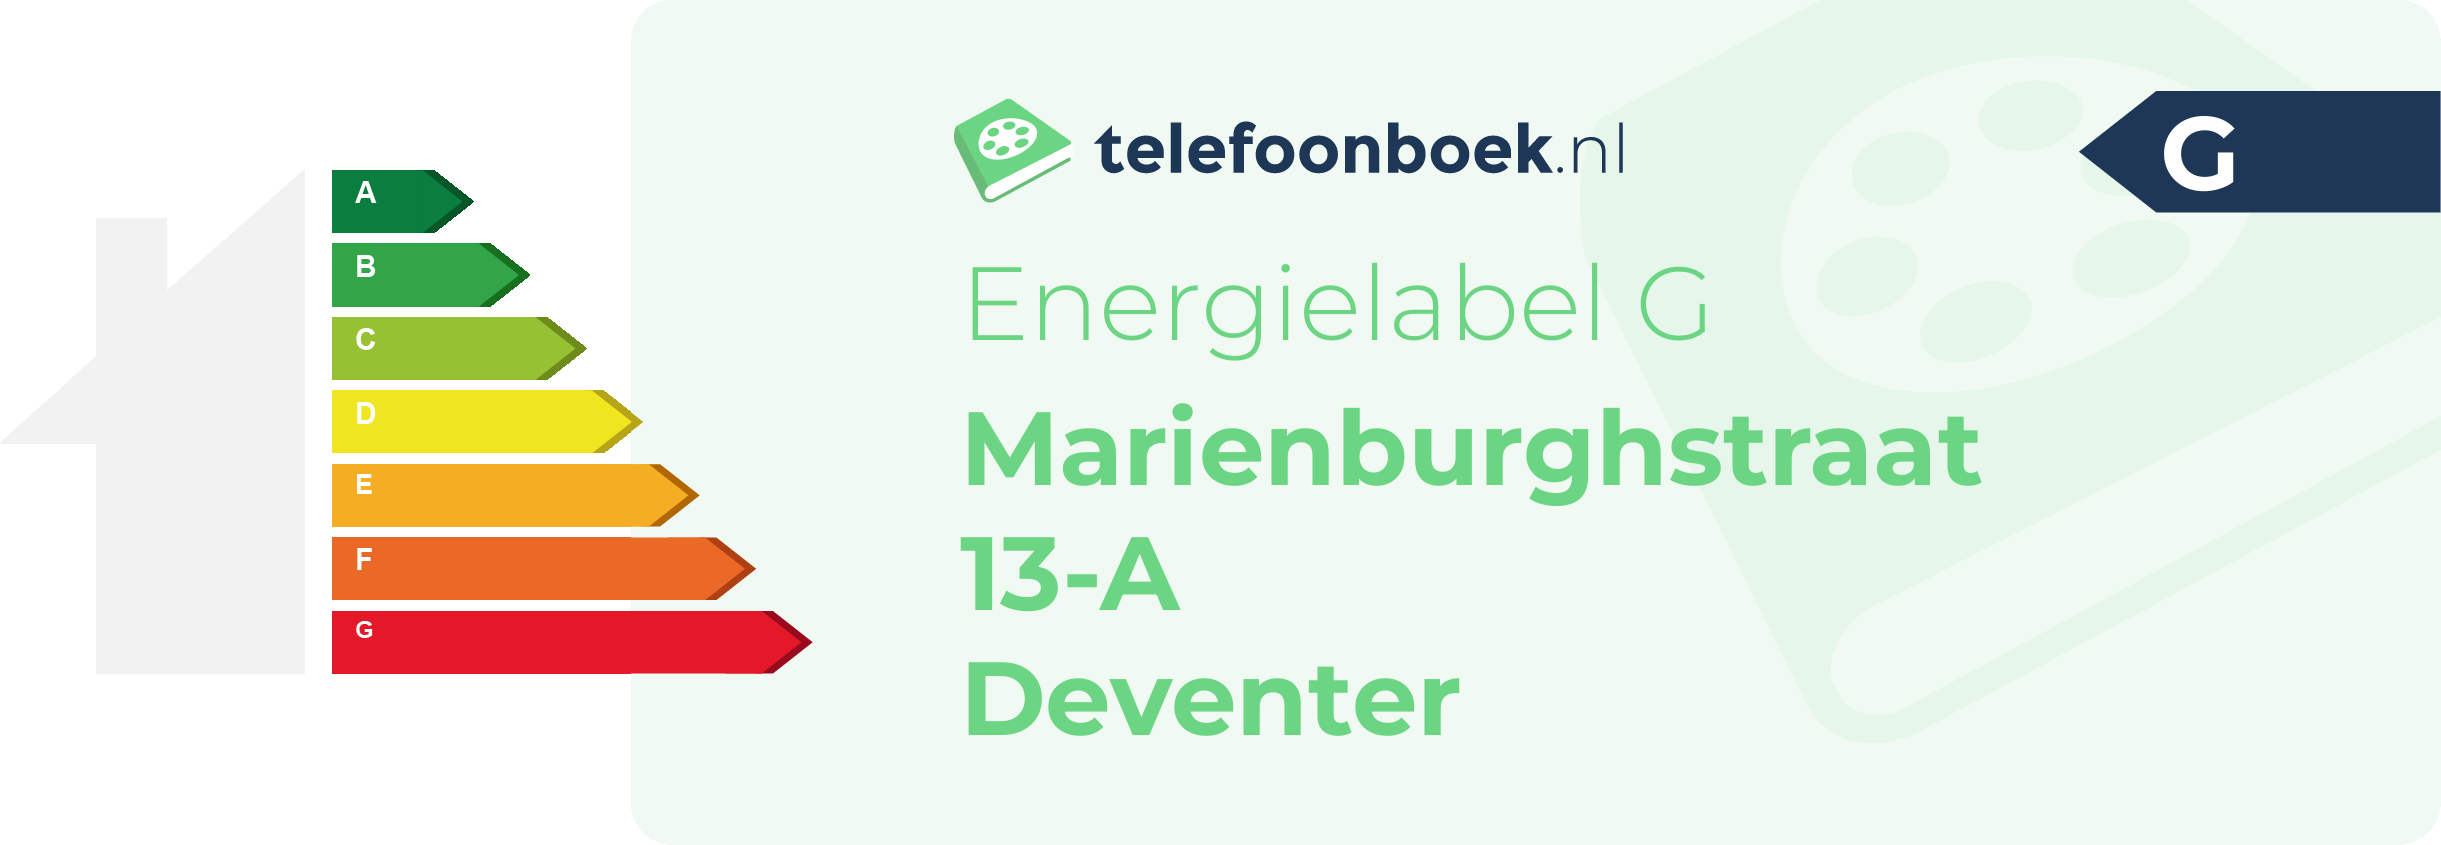 Energielabel Marienburghstraat 13-A Deventer